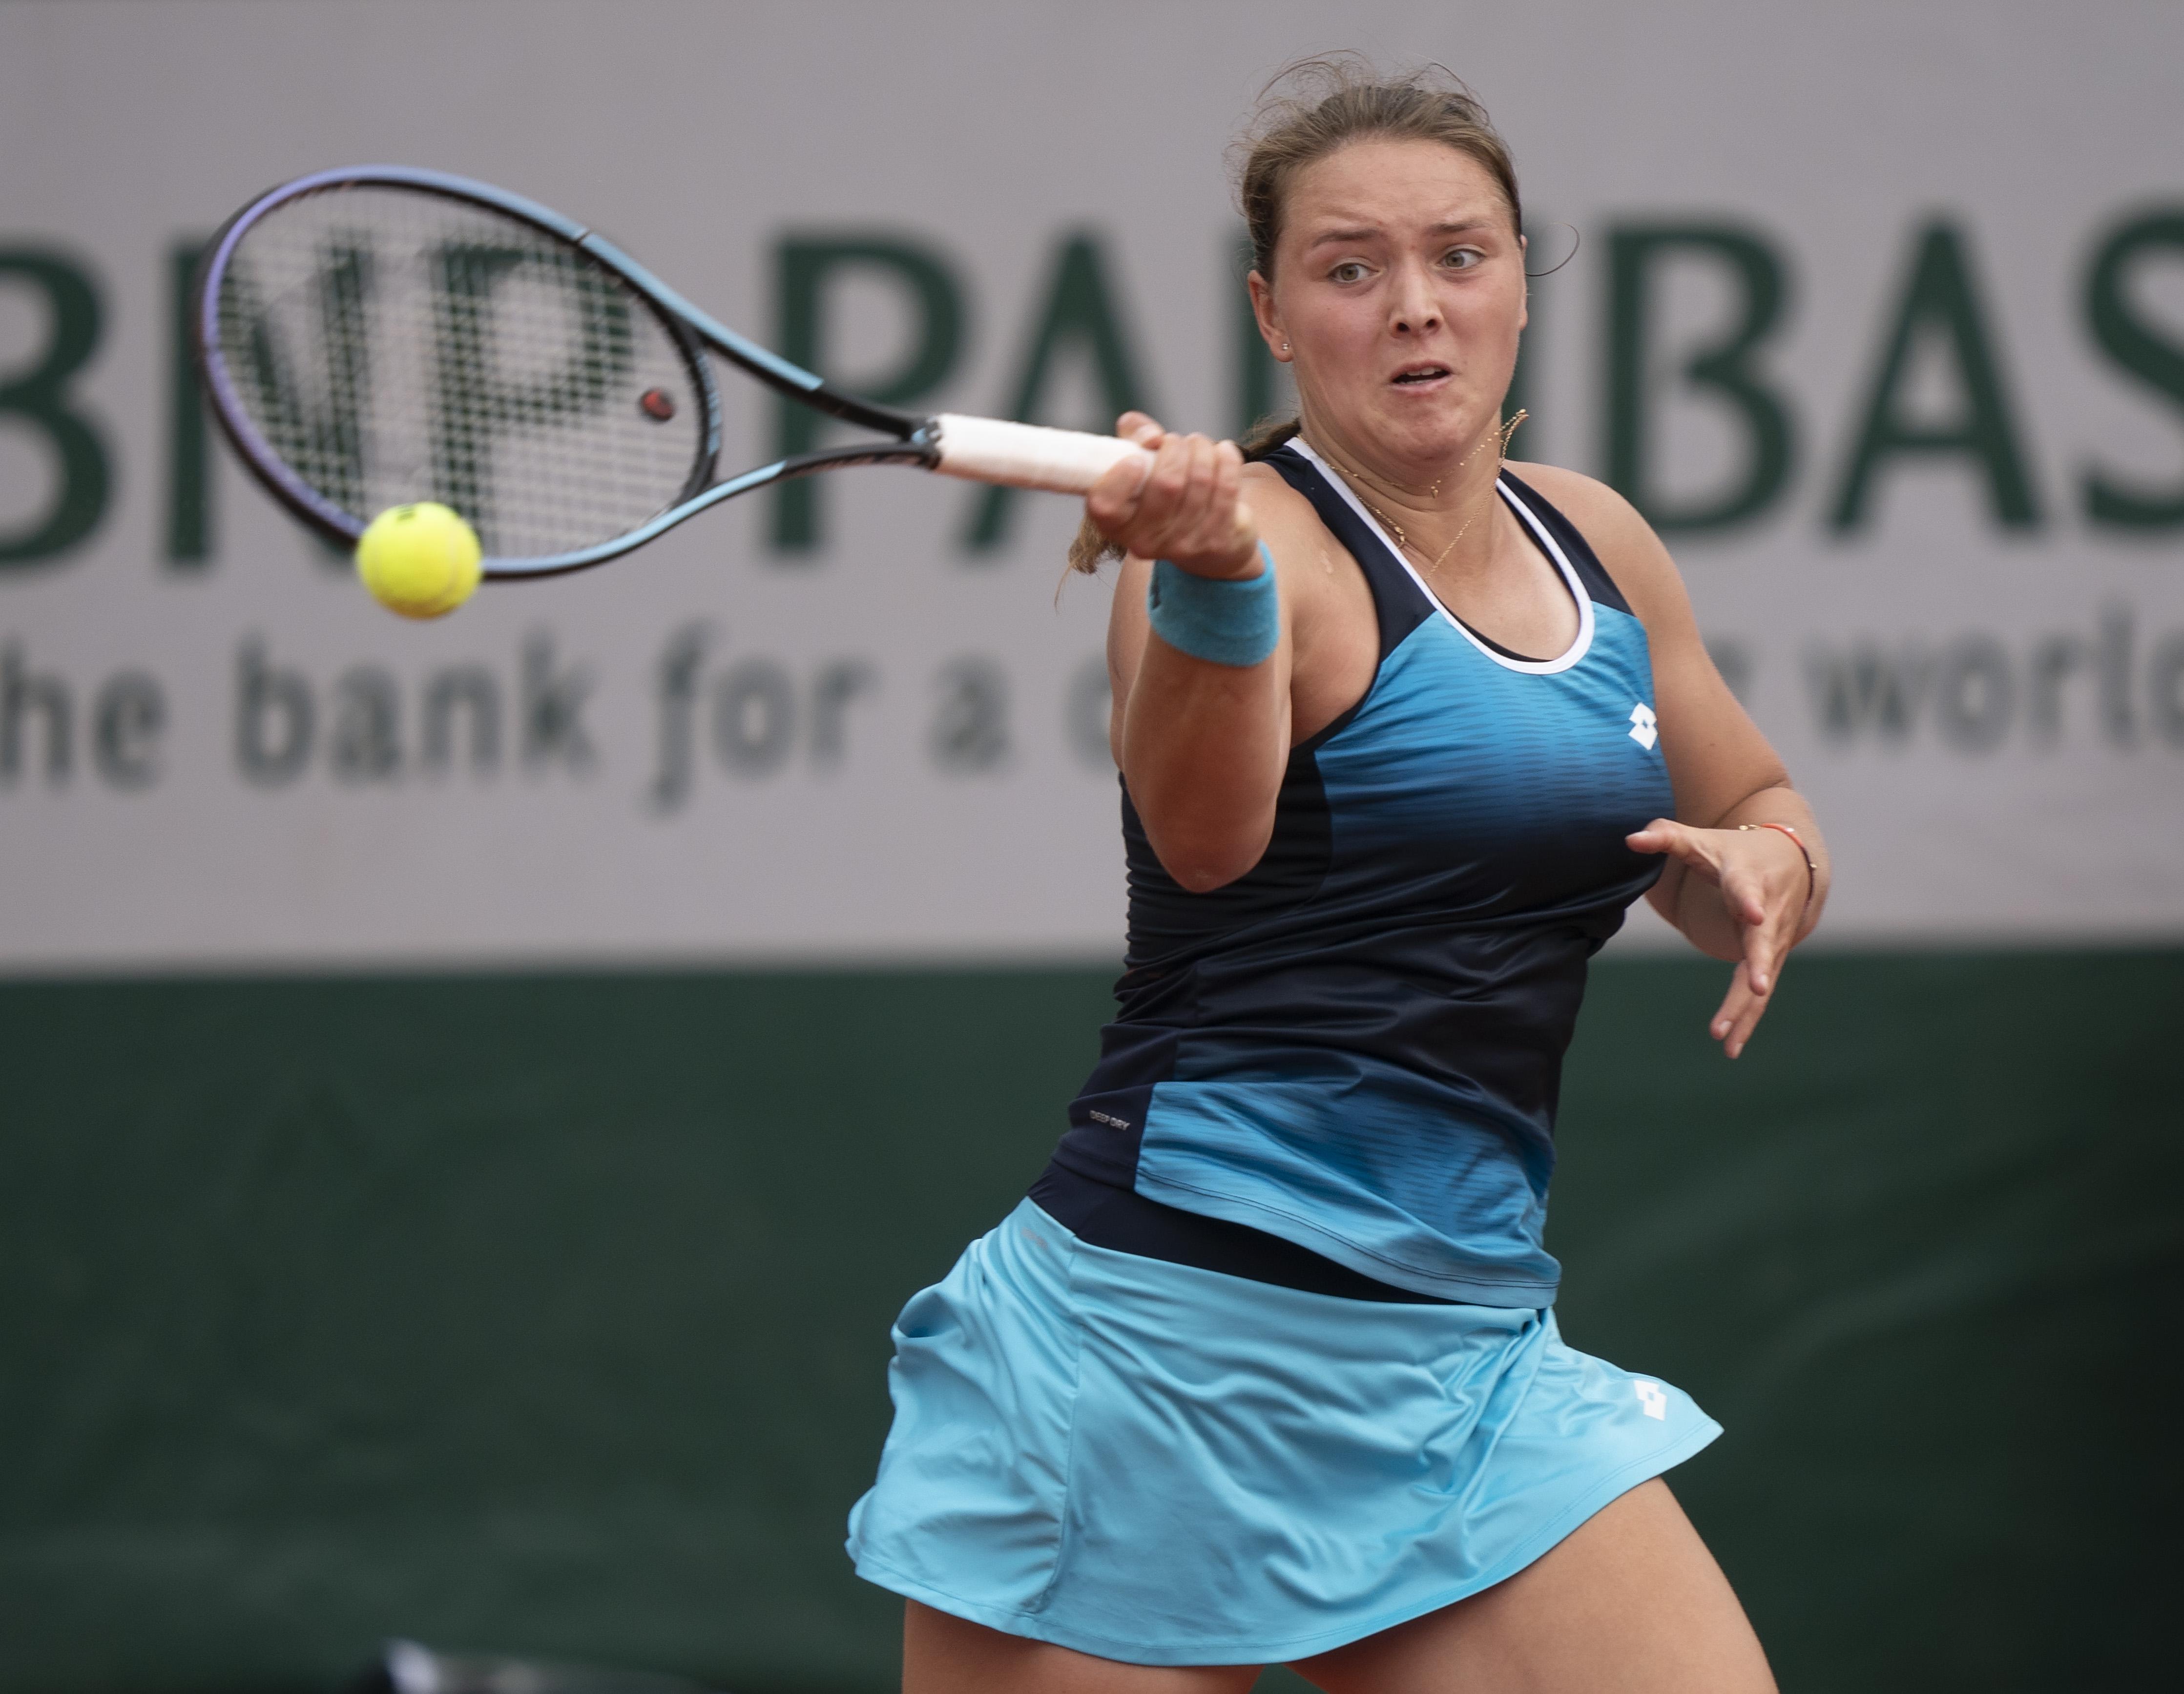 Lesia Tsurenko vs Jule Niemeier Odds, Prediction and Betting Trends for 2022 Wimbledon Women's Round 3 Match